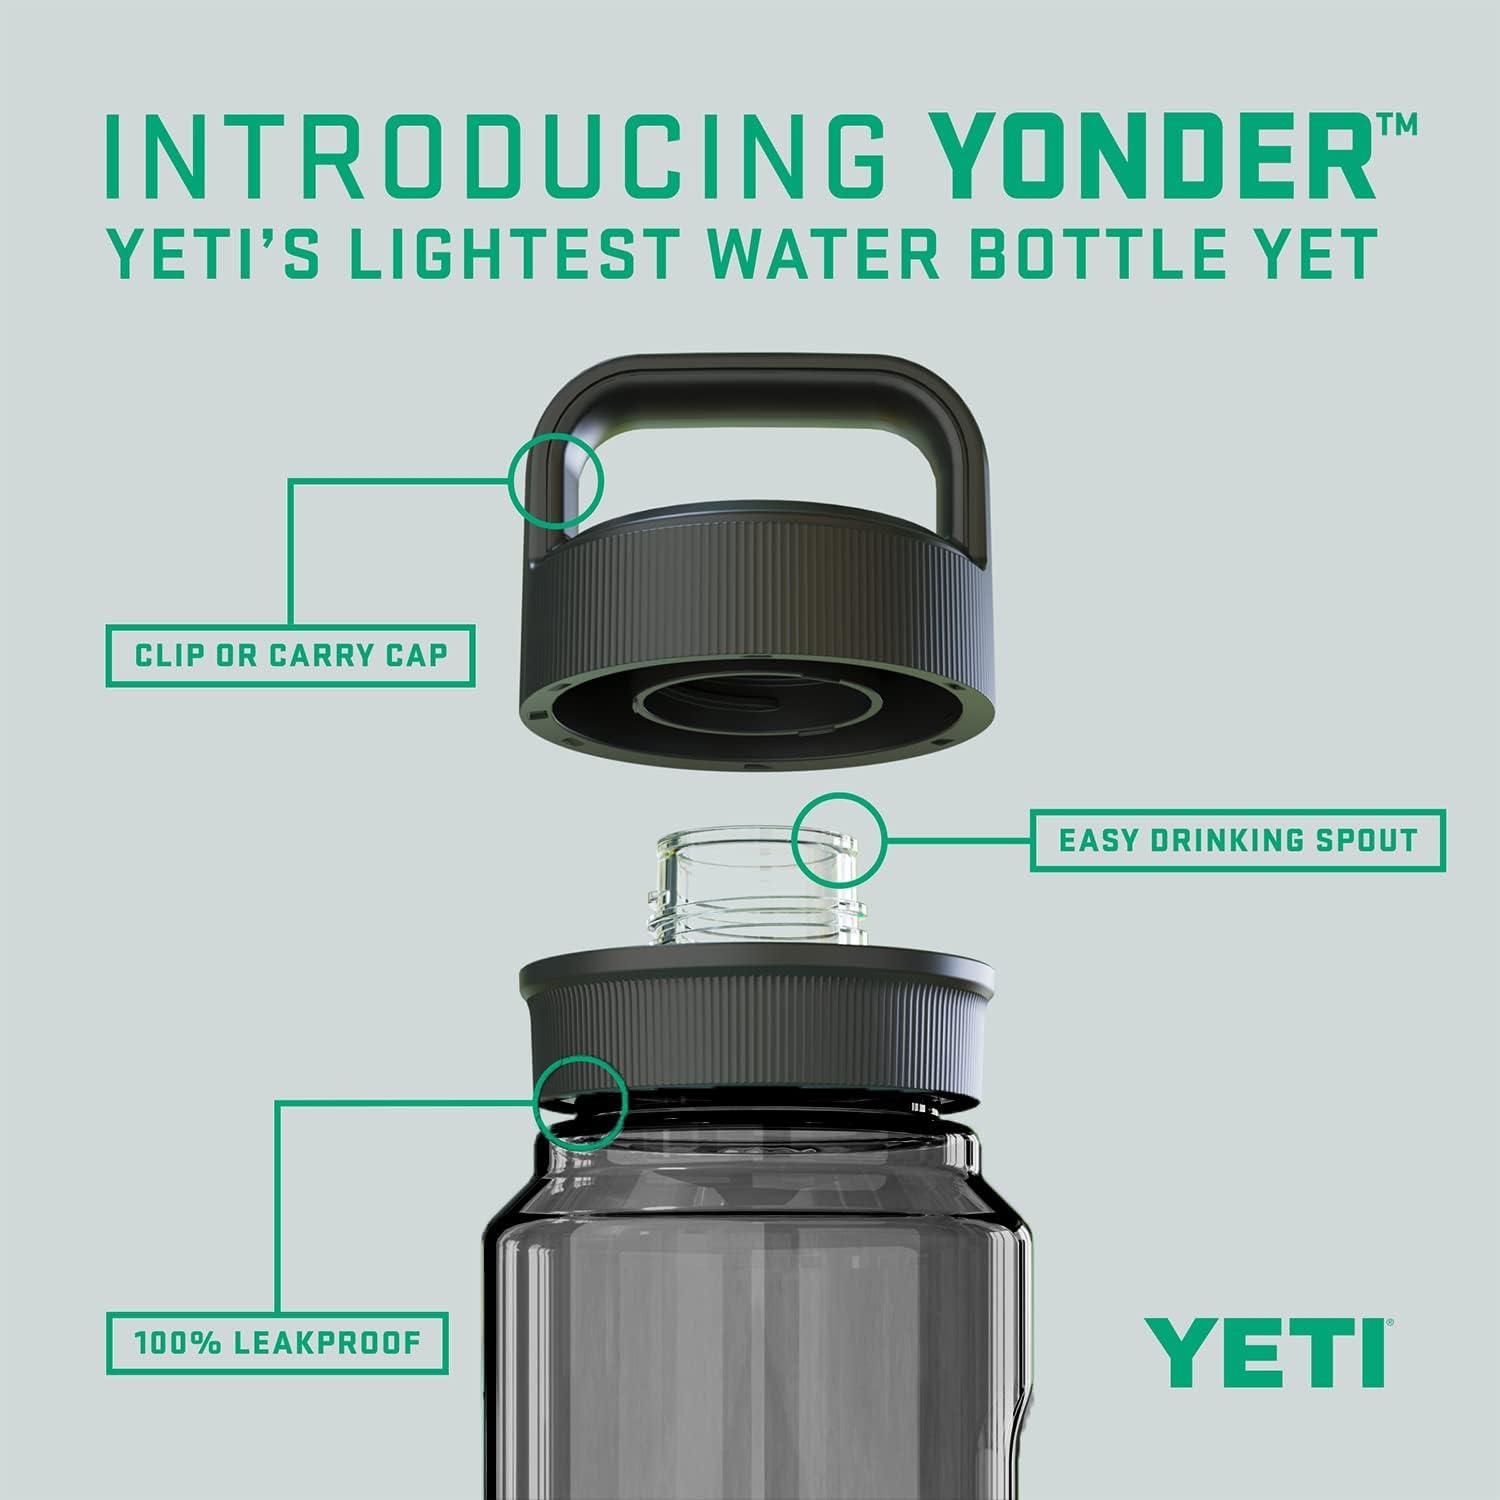 YETI Yonder Water Bottle Navy 25 Oz…